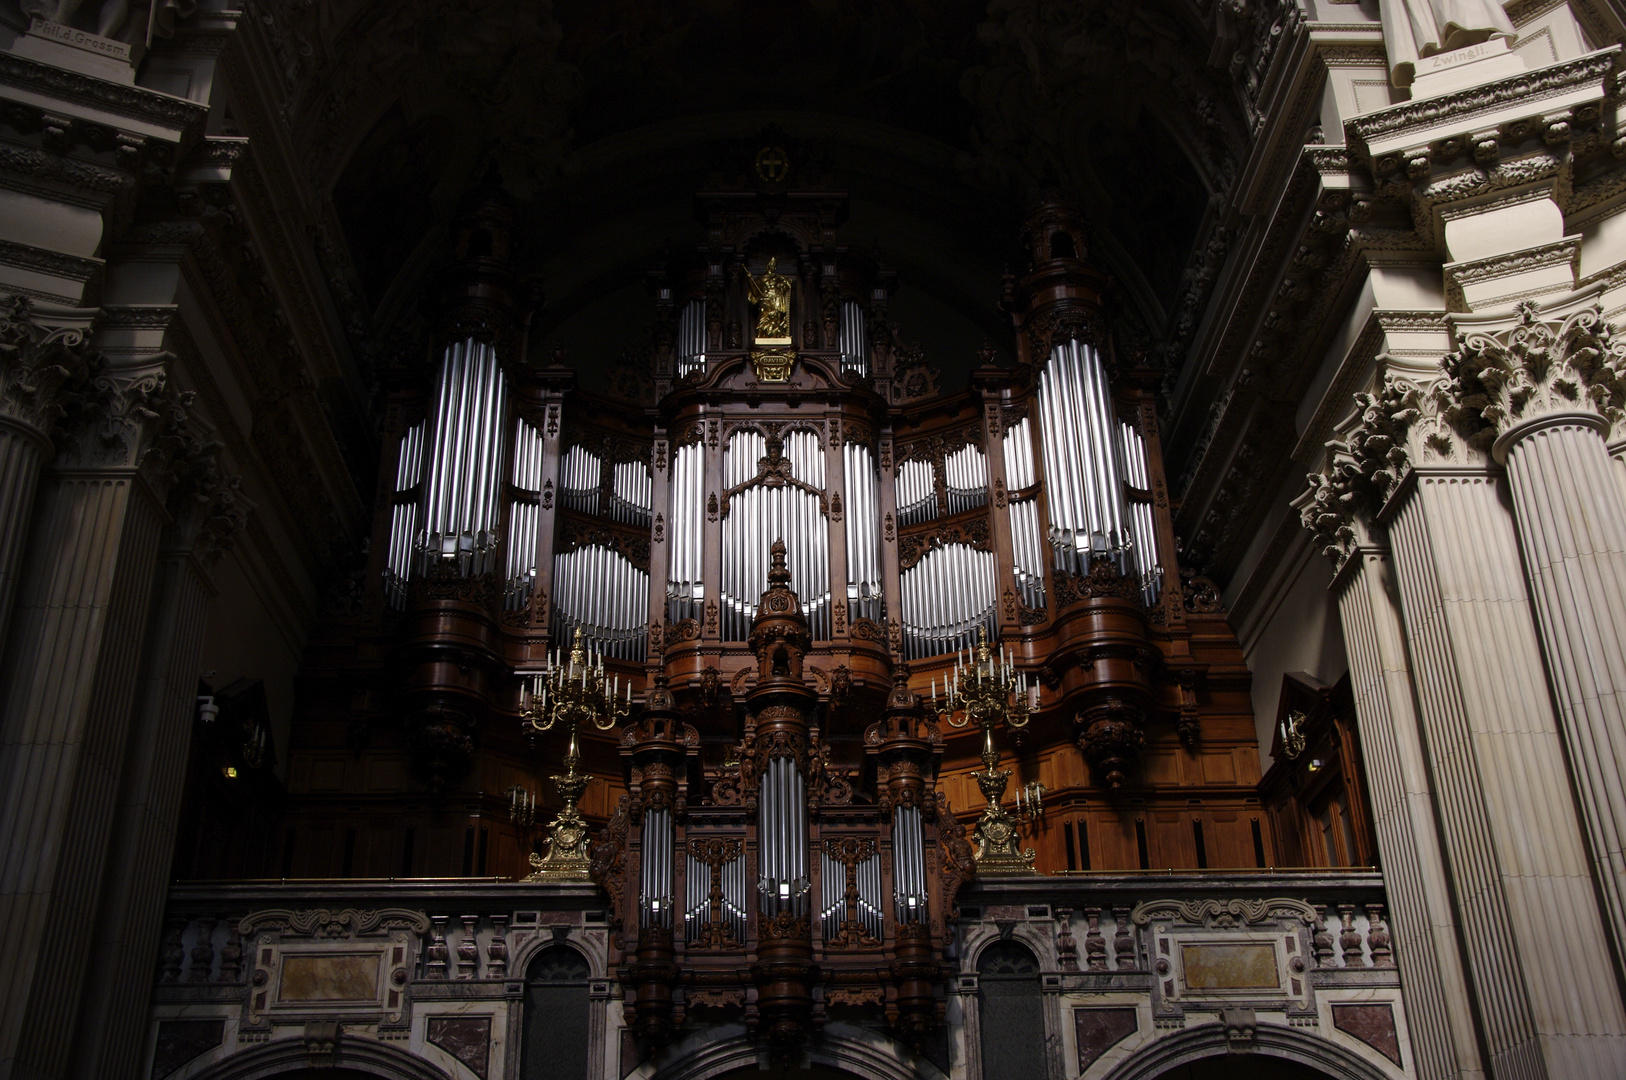 the mighty organ